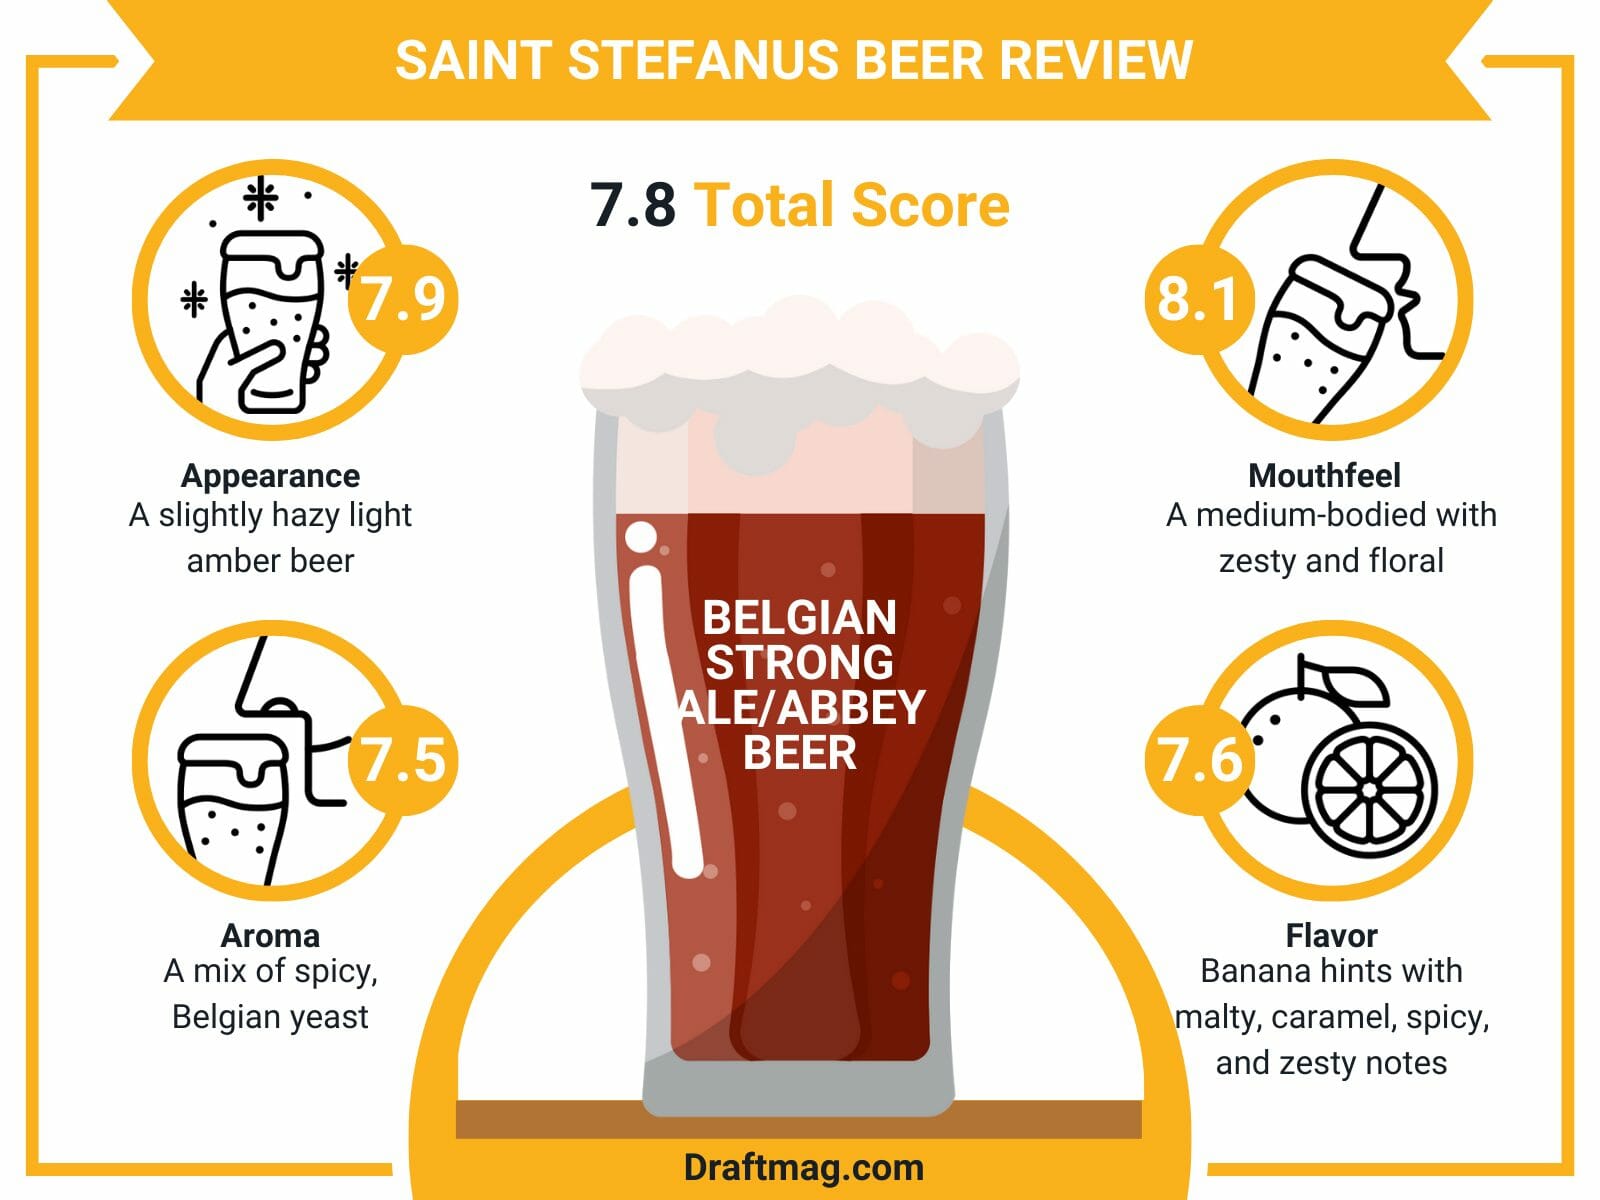 Saint stefanus beer review infographic